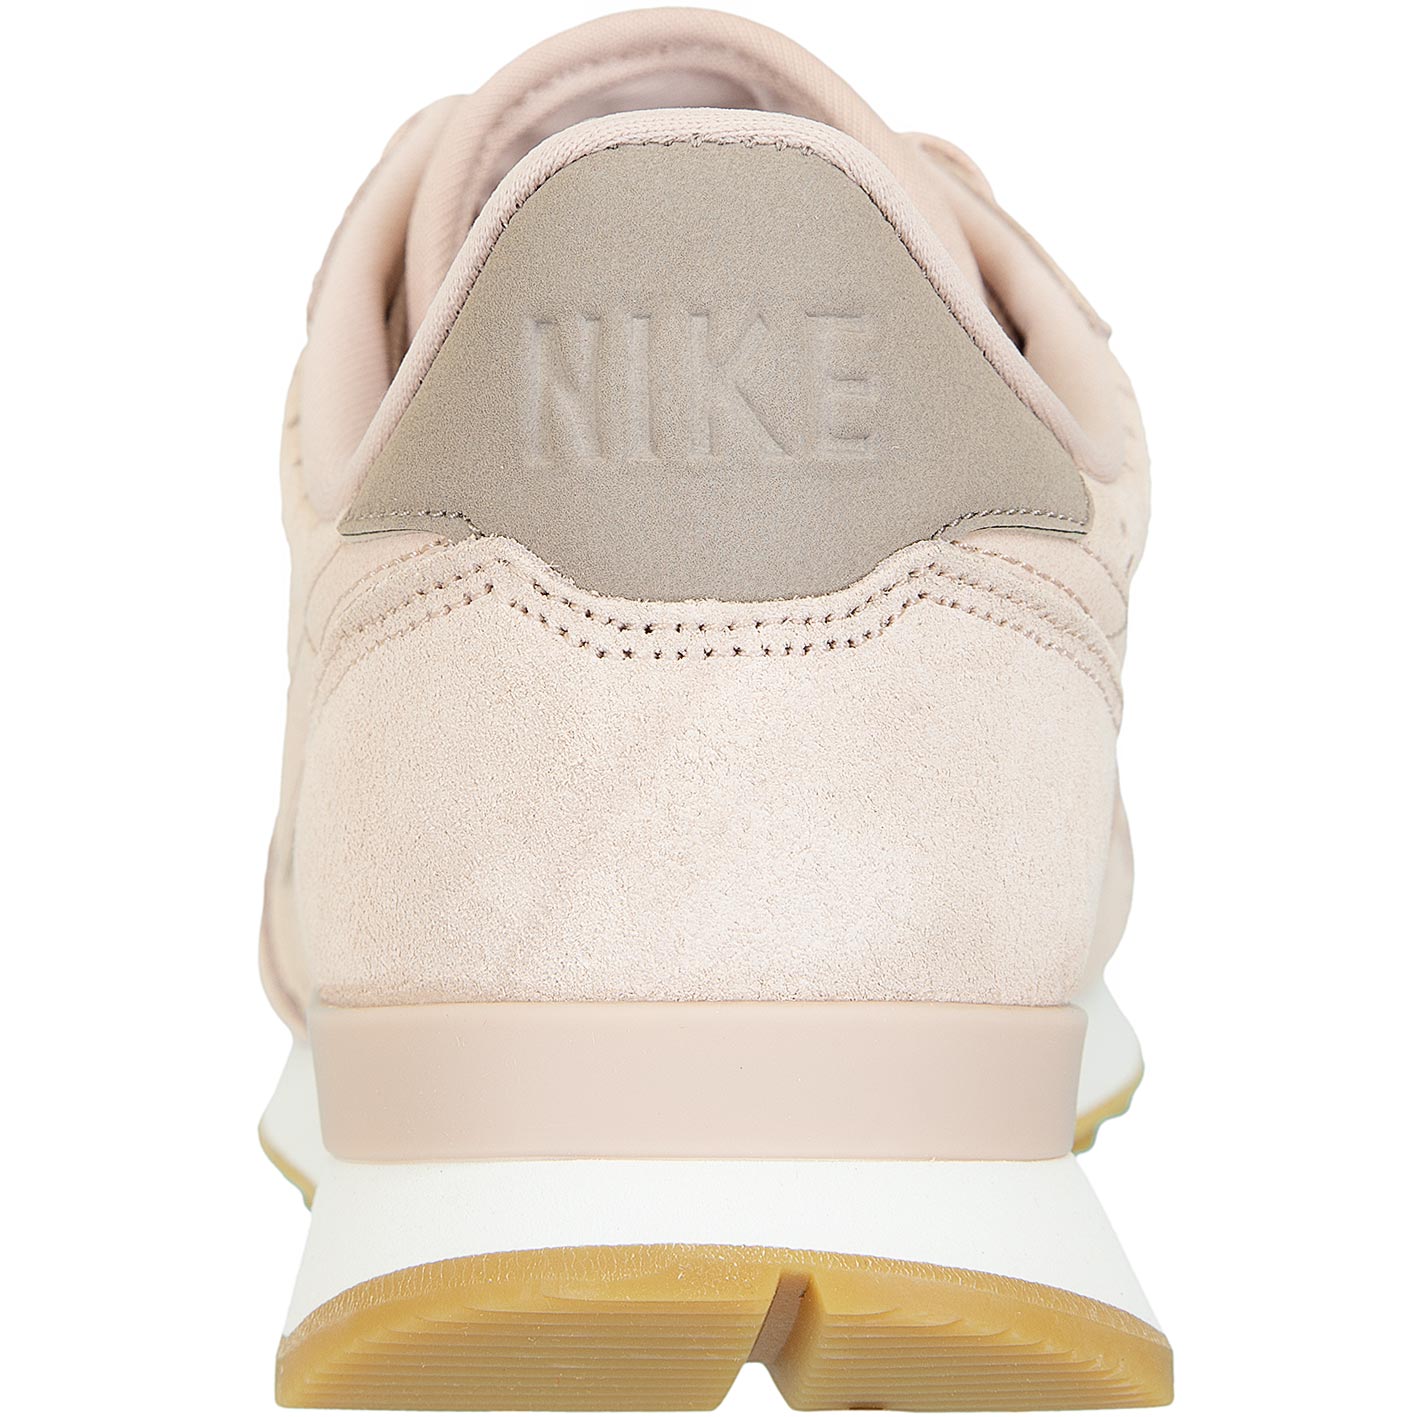 ☆ Nike Damen Sneaker Internationalist Premium rosa - hier bestellen!